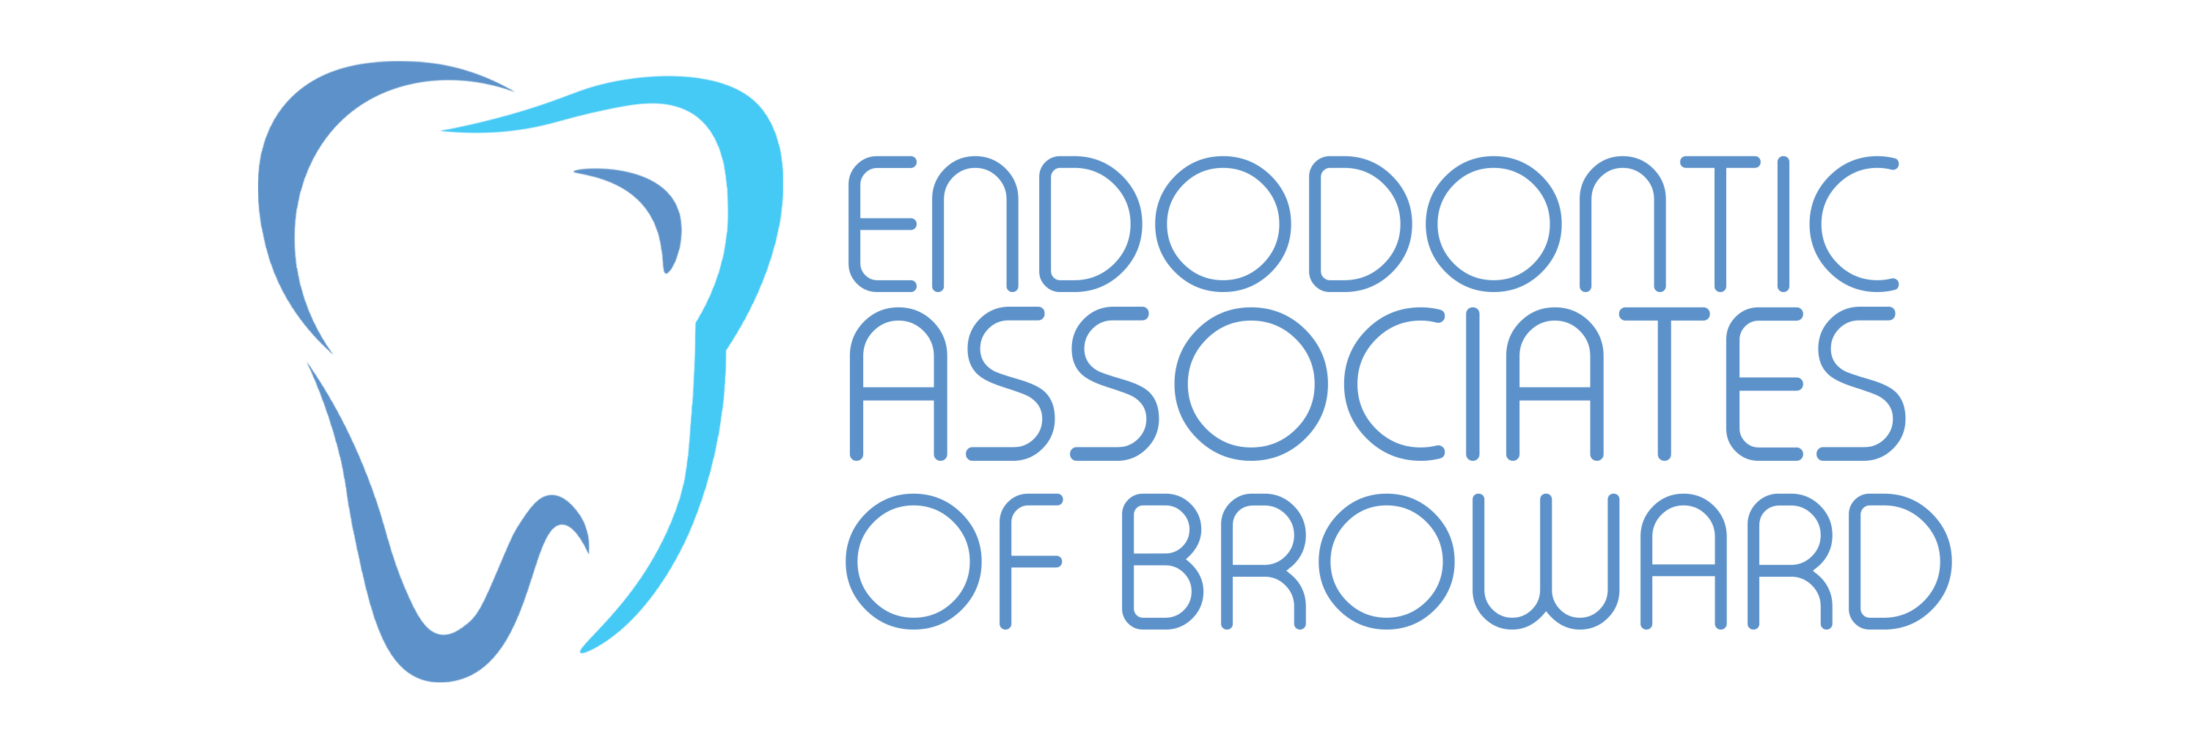 Link to Endodontic Associates of Broward home page